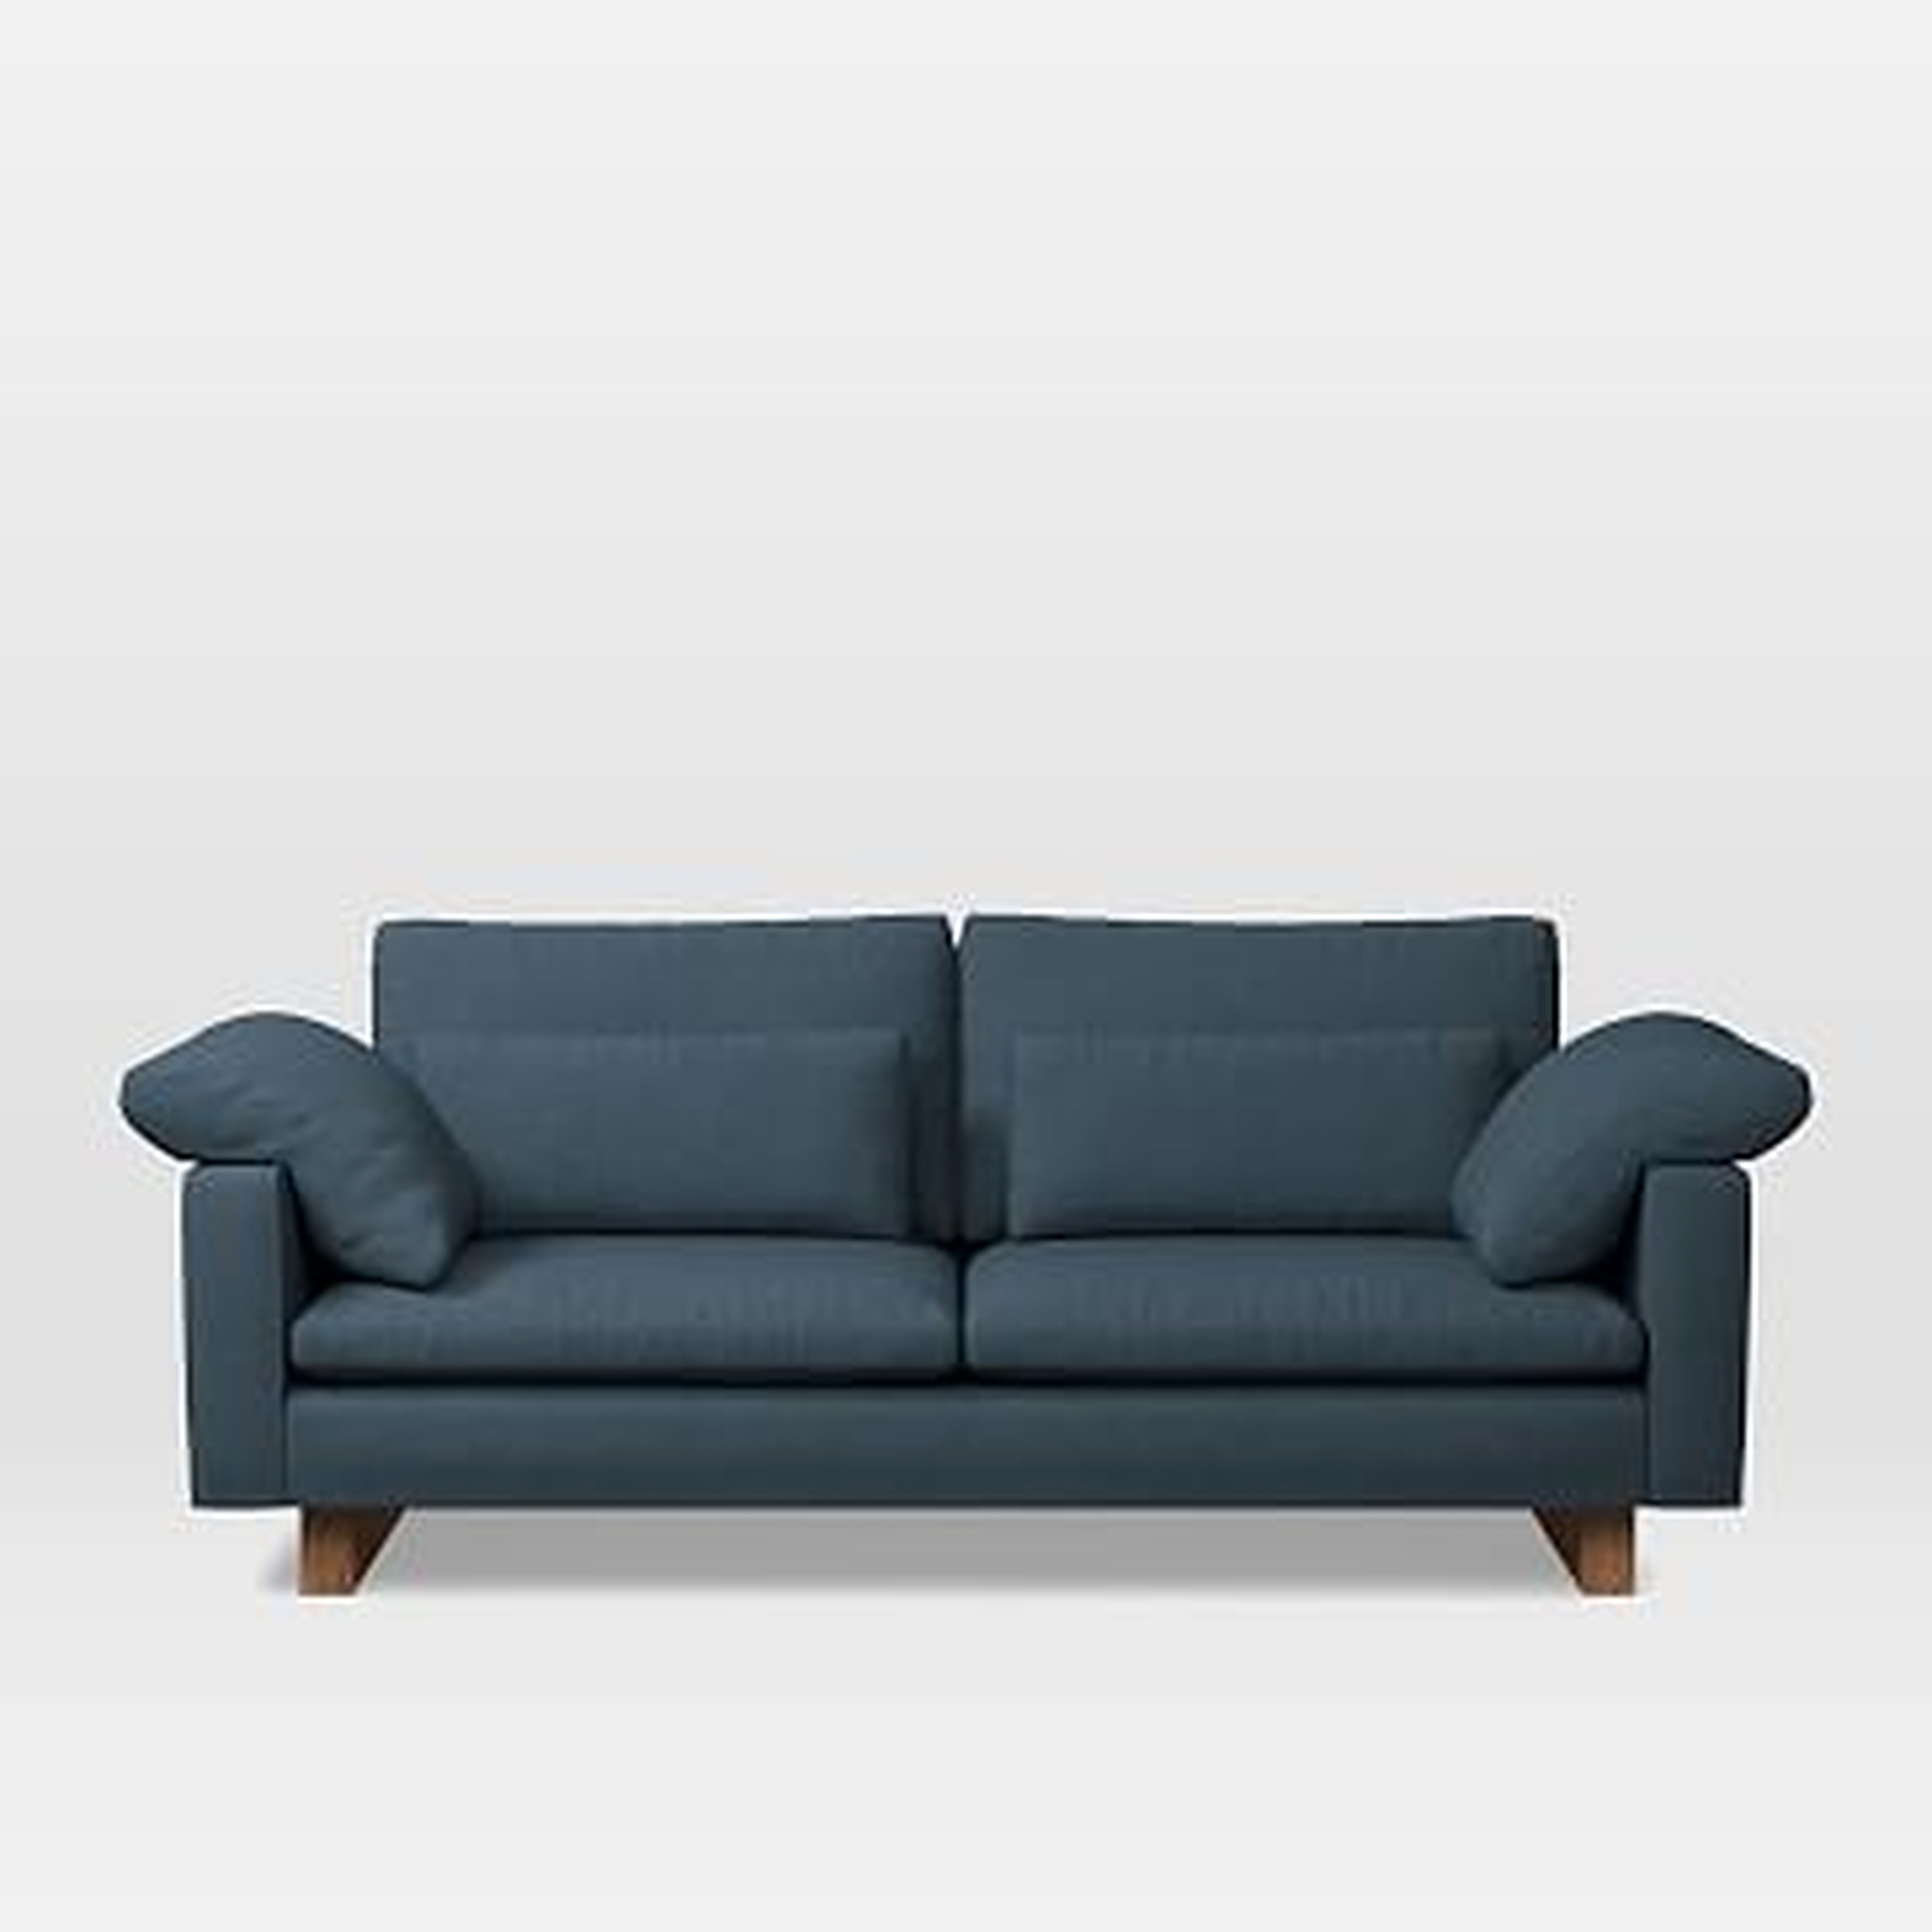 Harmony 82" Sofa (2.5 Seater), Linen Weave, Regal Blue - West Elm